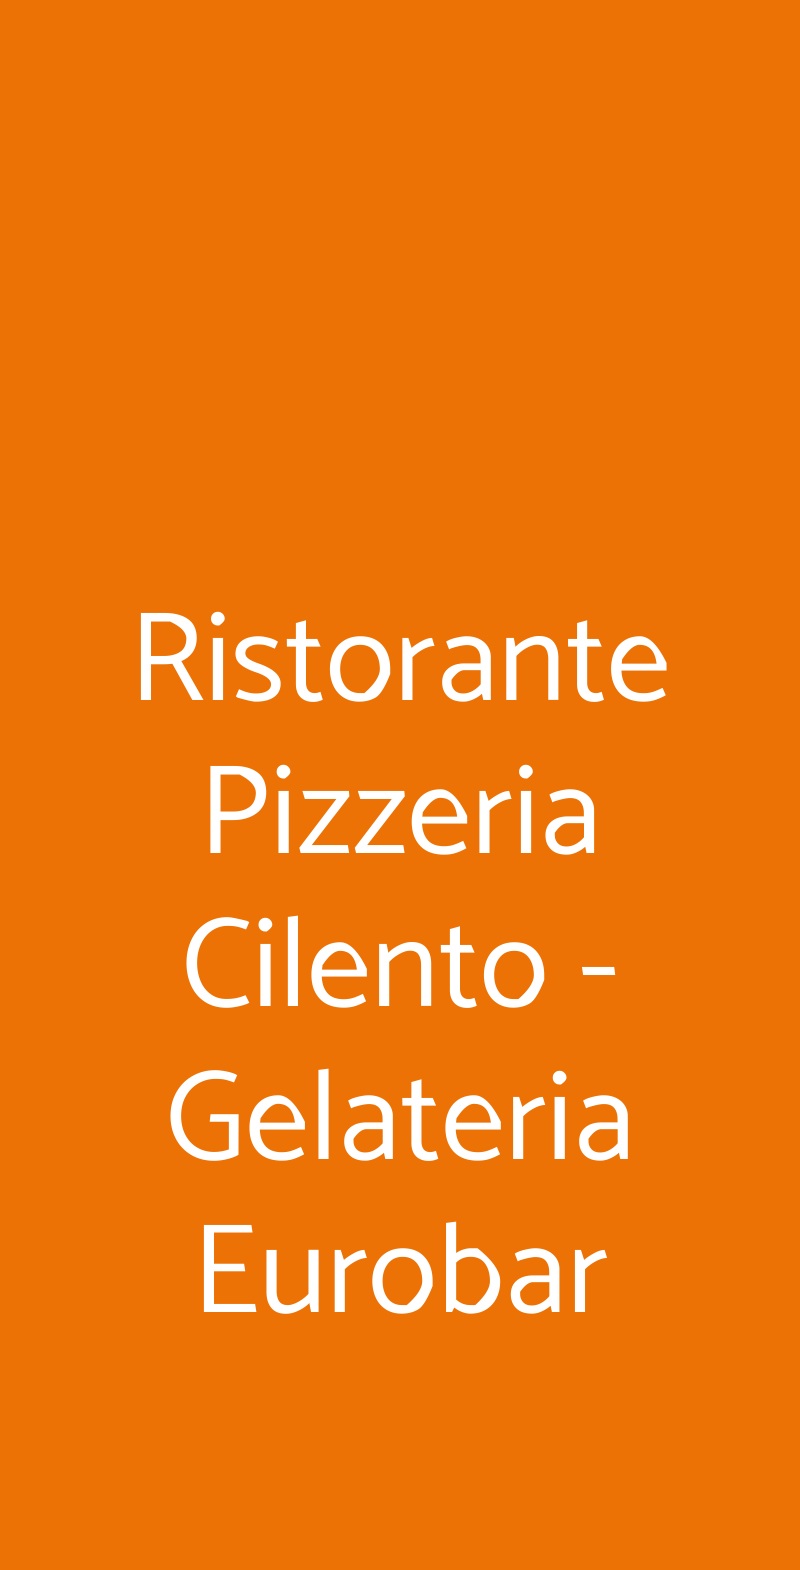 Ristorante Pizzeria Cilento - Gelateria Eurobar Sirmione menù 1 pagina